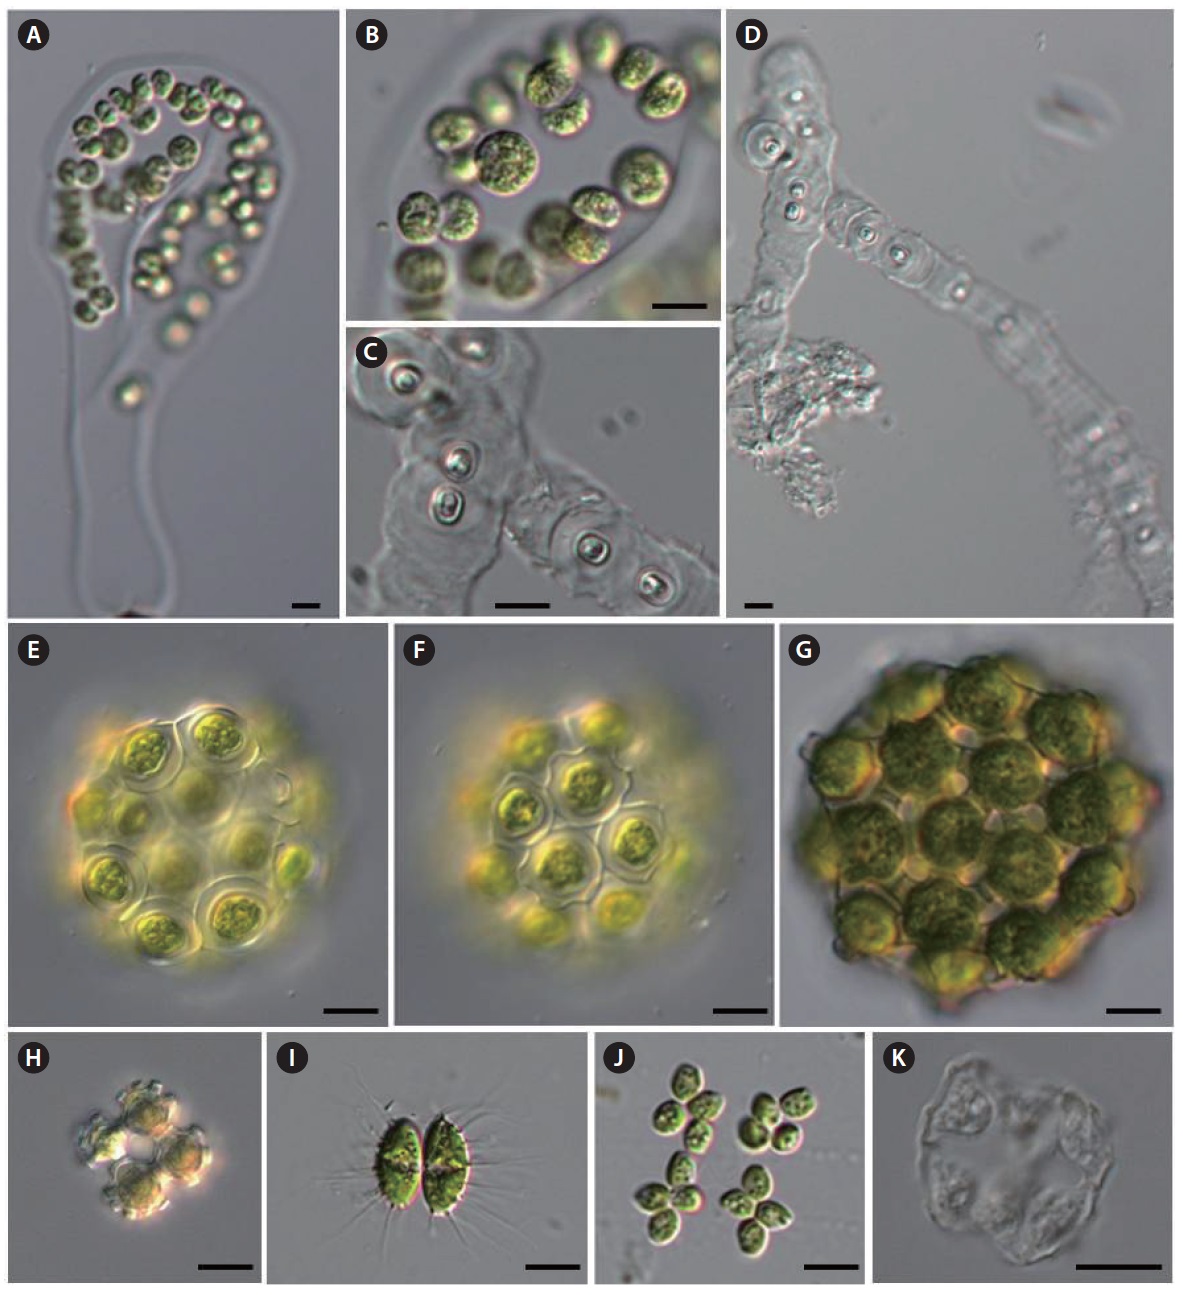 (A, B) Palmodictyon viride, (C, D) Gloeodendron ramosum, (E, F) Coelastrum indicum, (G) C. pulchrum, (H) C. verrucosum, (I) Dicellula geminata, (J) Hofmania africana, (K) Pectodictyon pyramidale. Scale bars, 10 μm.